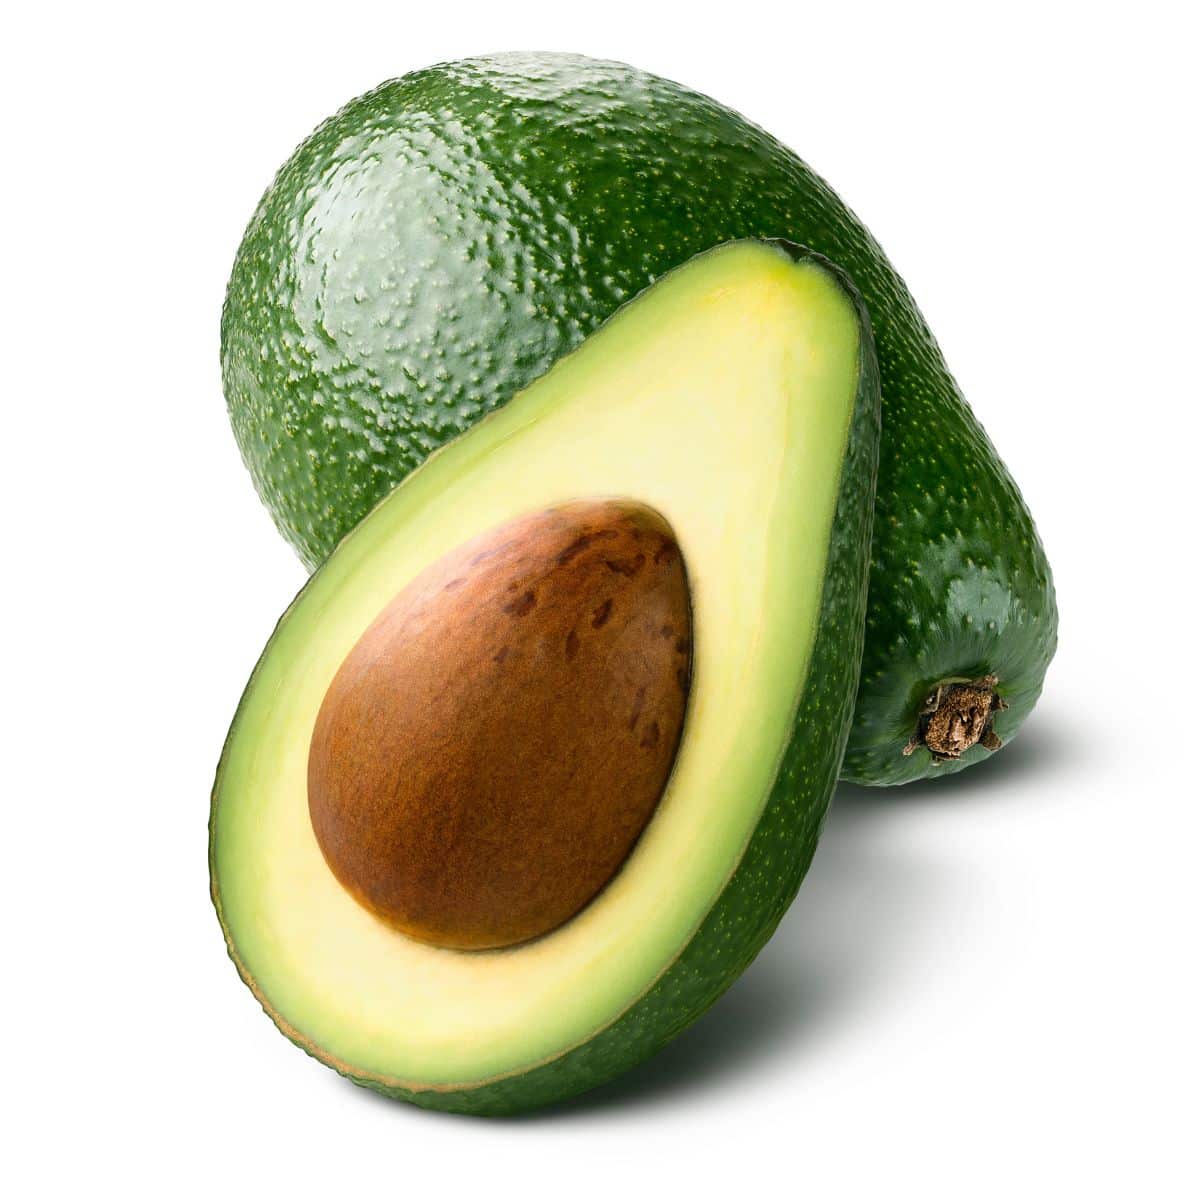 A cut open rincon avocado on. white background.